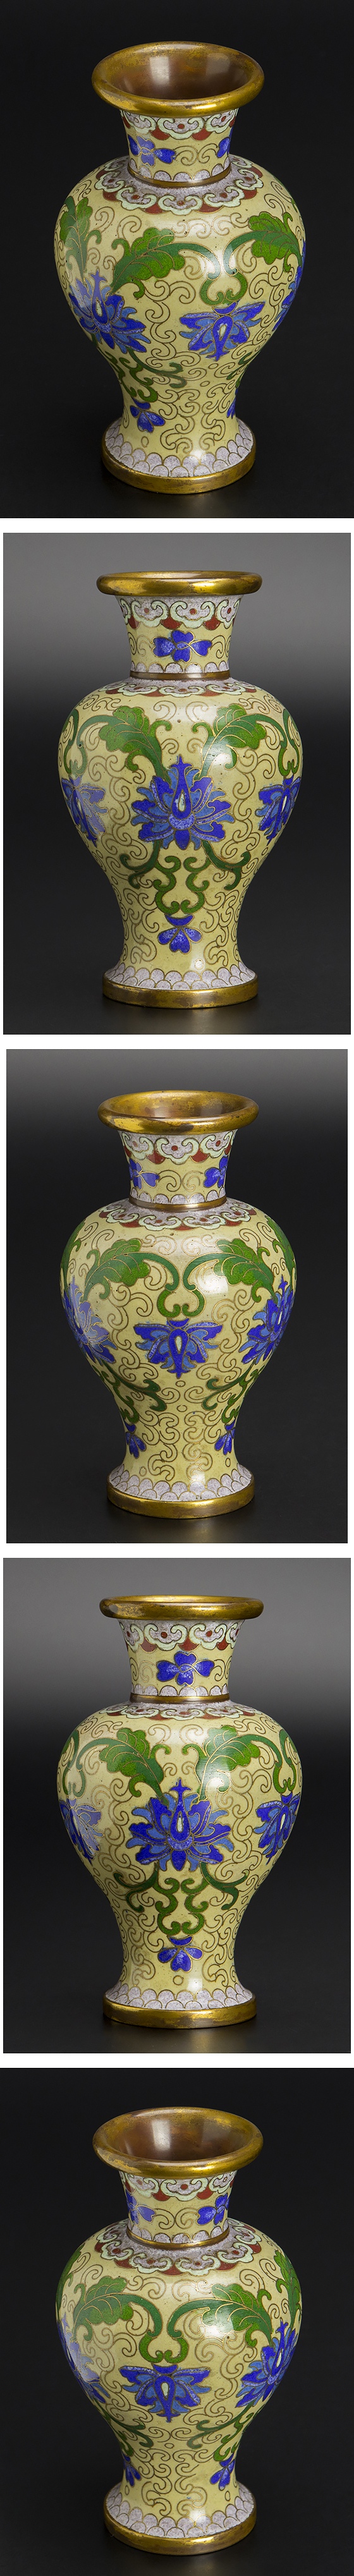 日本公式清 掐丝珐琅花紋瓶 中国 古美術 その他